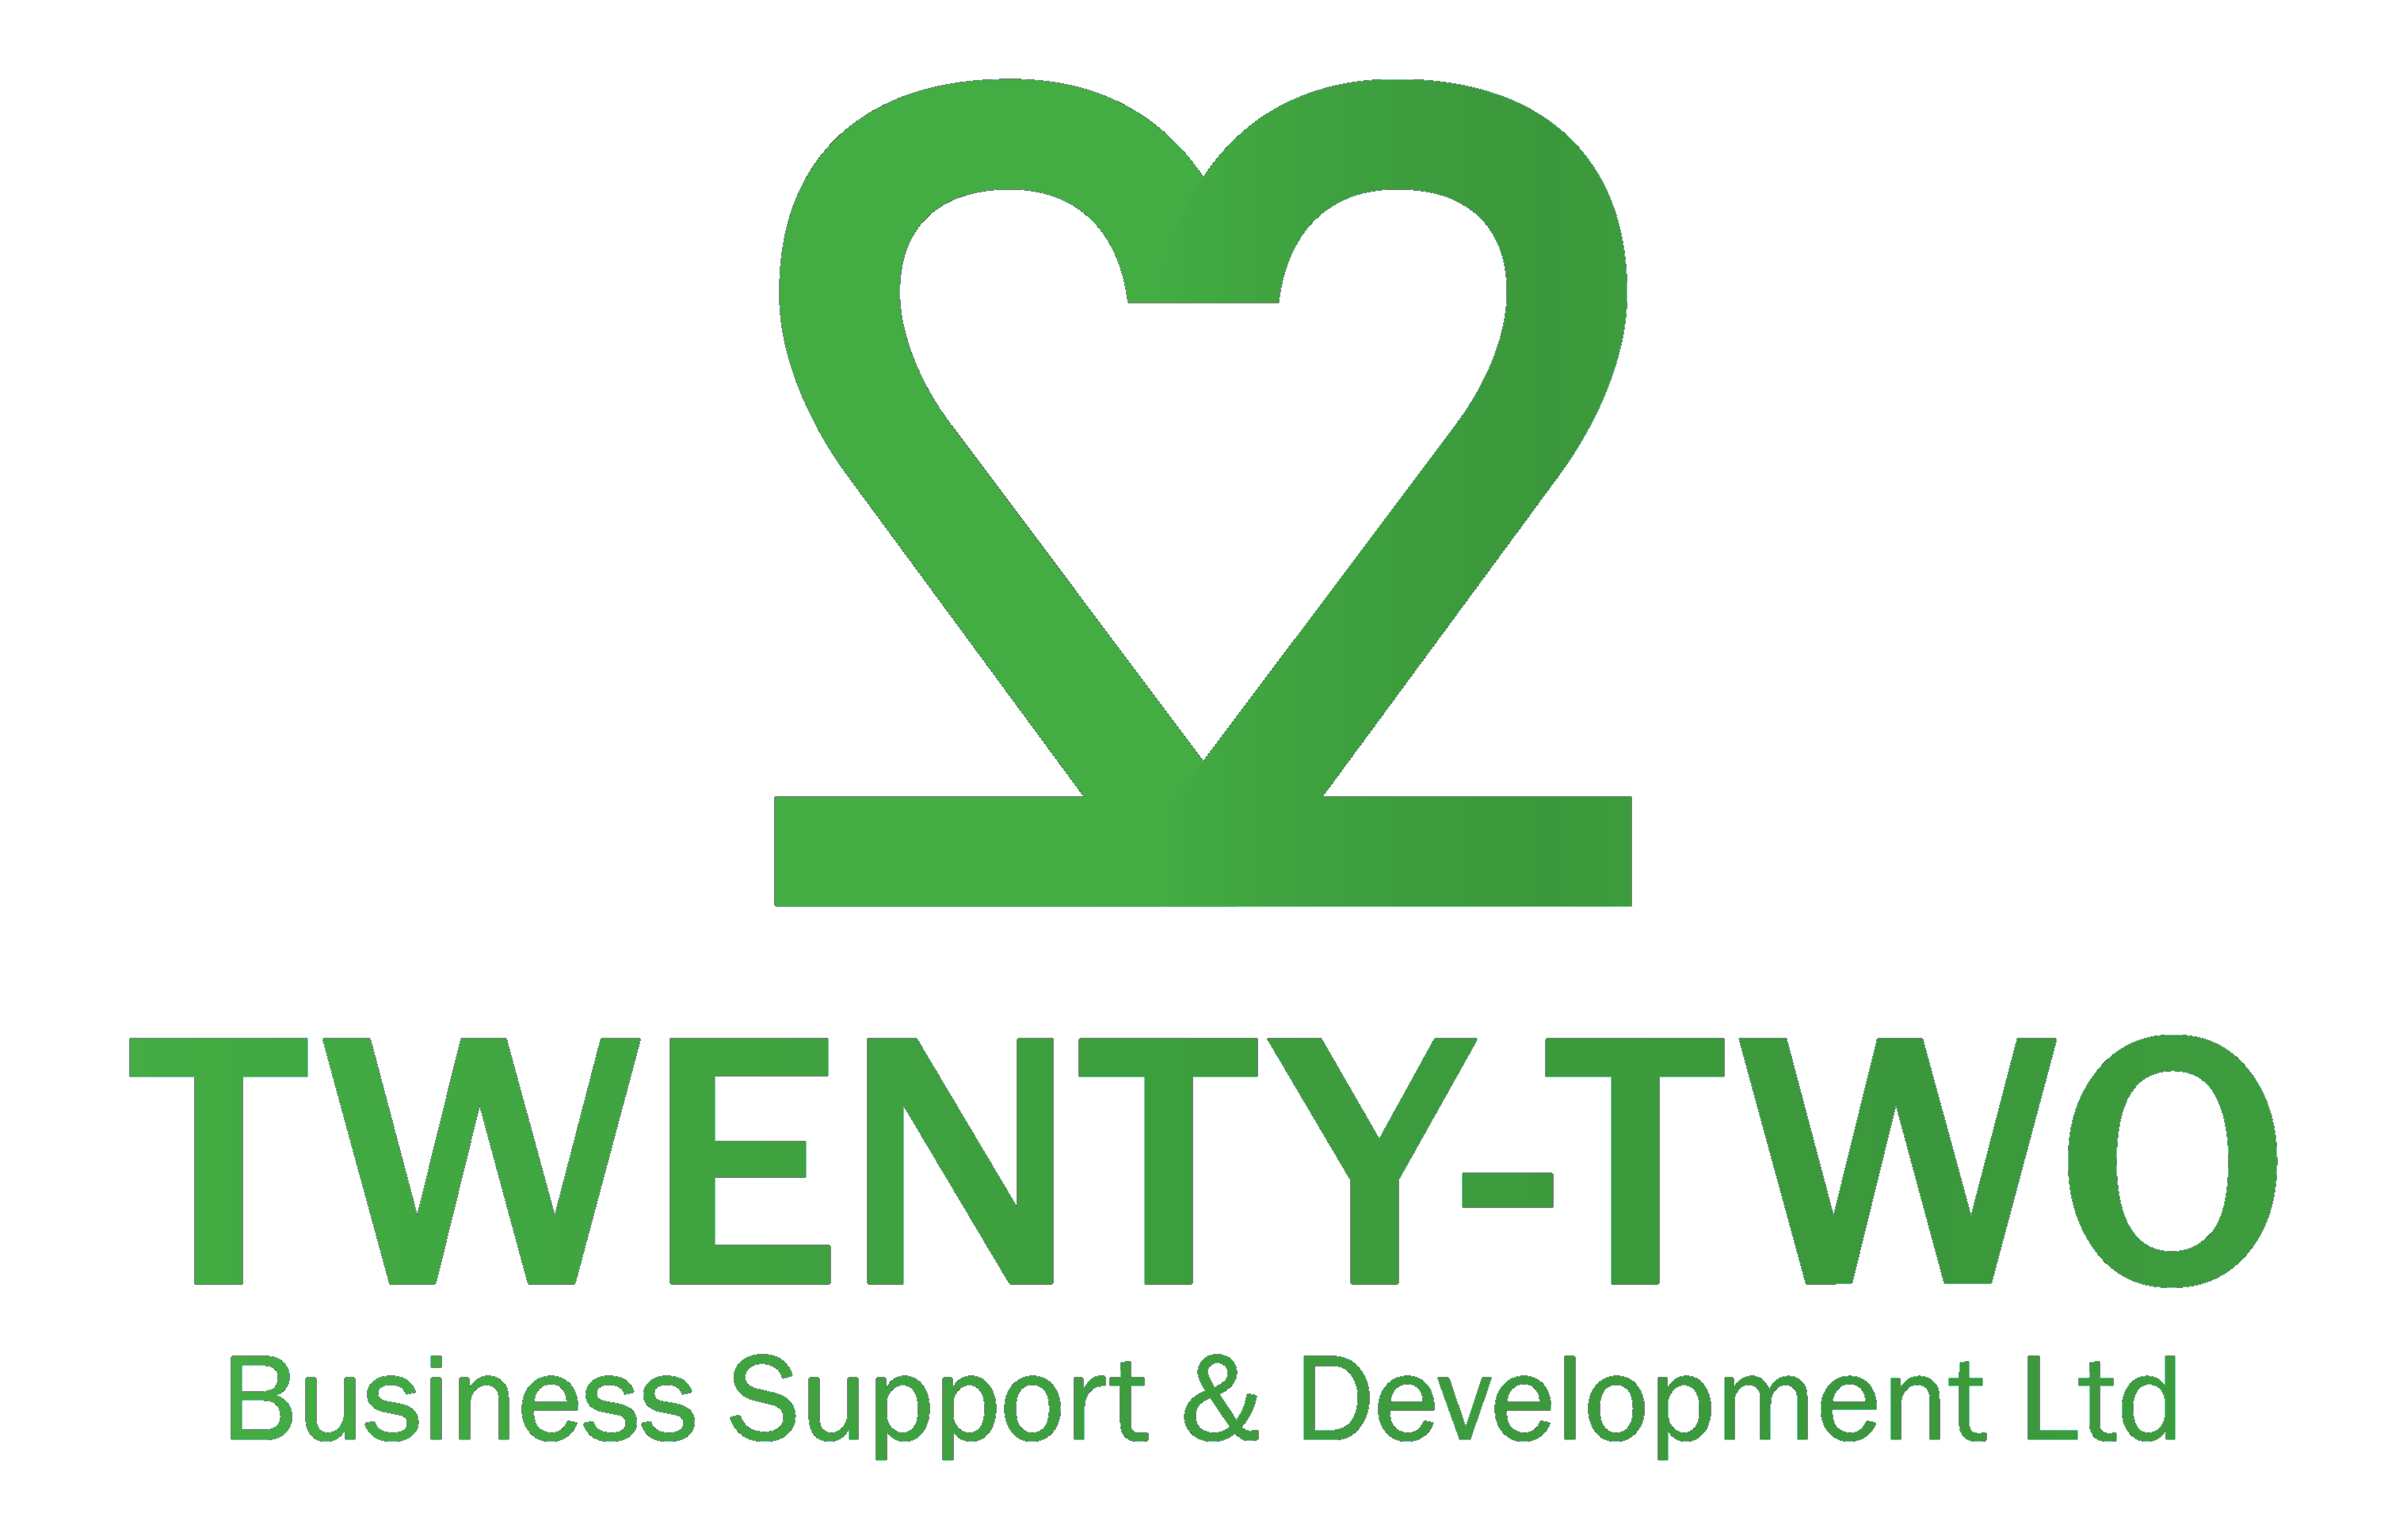 Twenty-Two Business Support & Development Ltd logo.